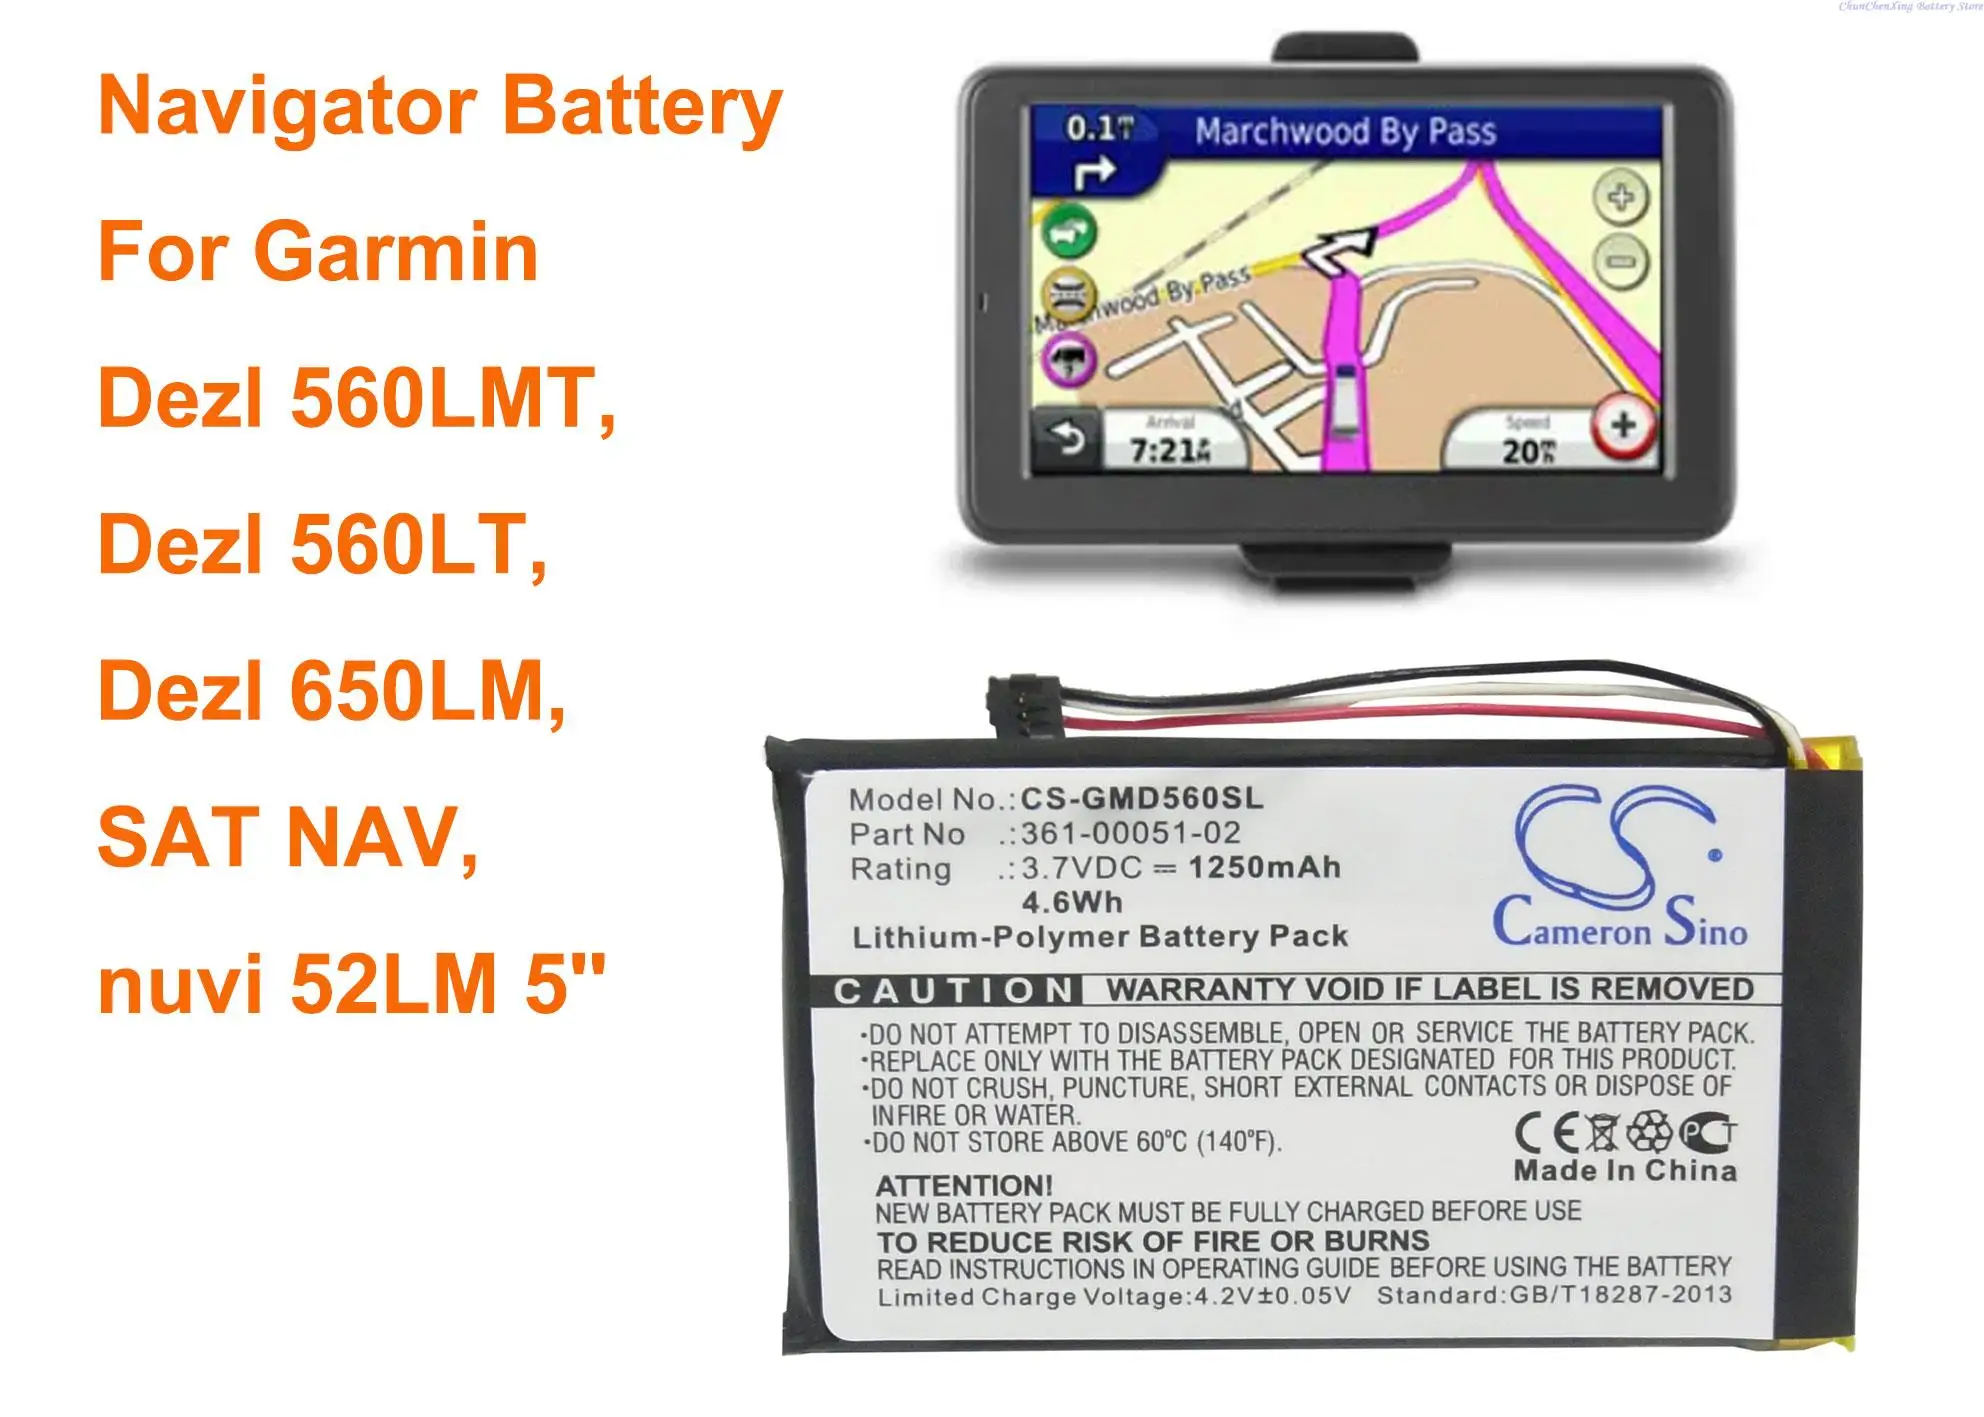 Cameron Sino 1250 mah GPS, Bateriju za vaš uređaj tvrtke Garmin Dezl 560LMT, Dezl 560LT, Dezl 650LM, satelitska NAVIGACIJA nuvi 52LM 5 